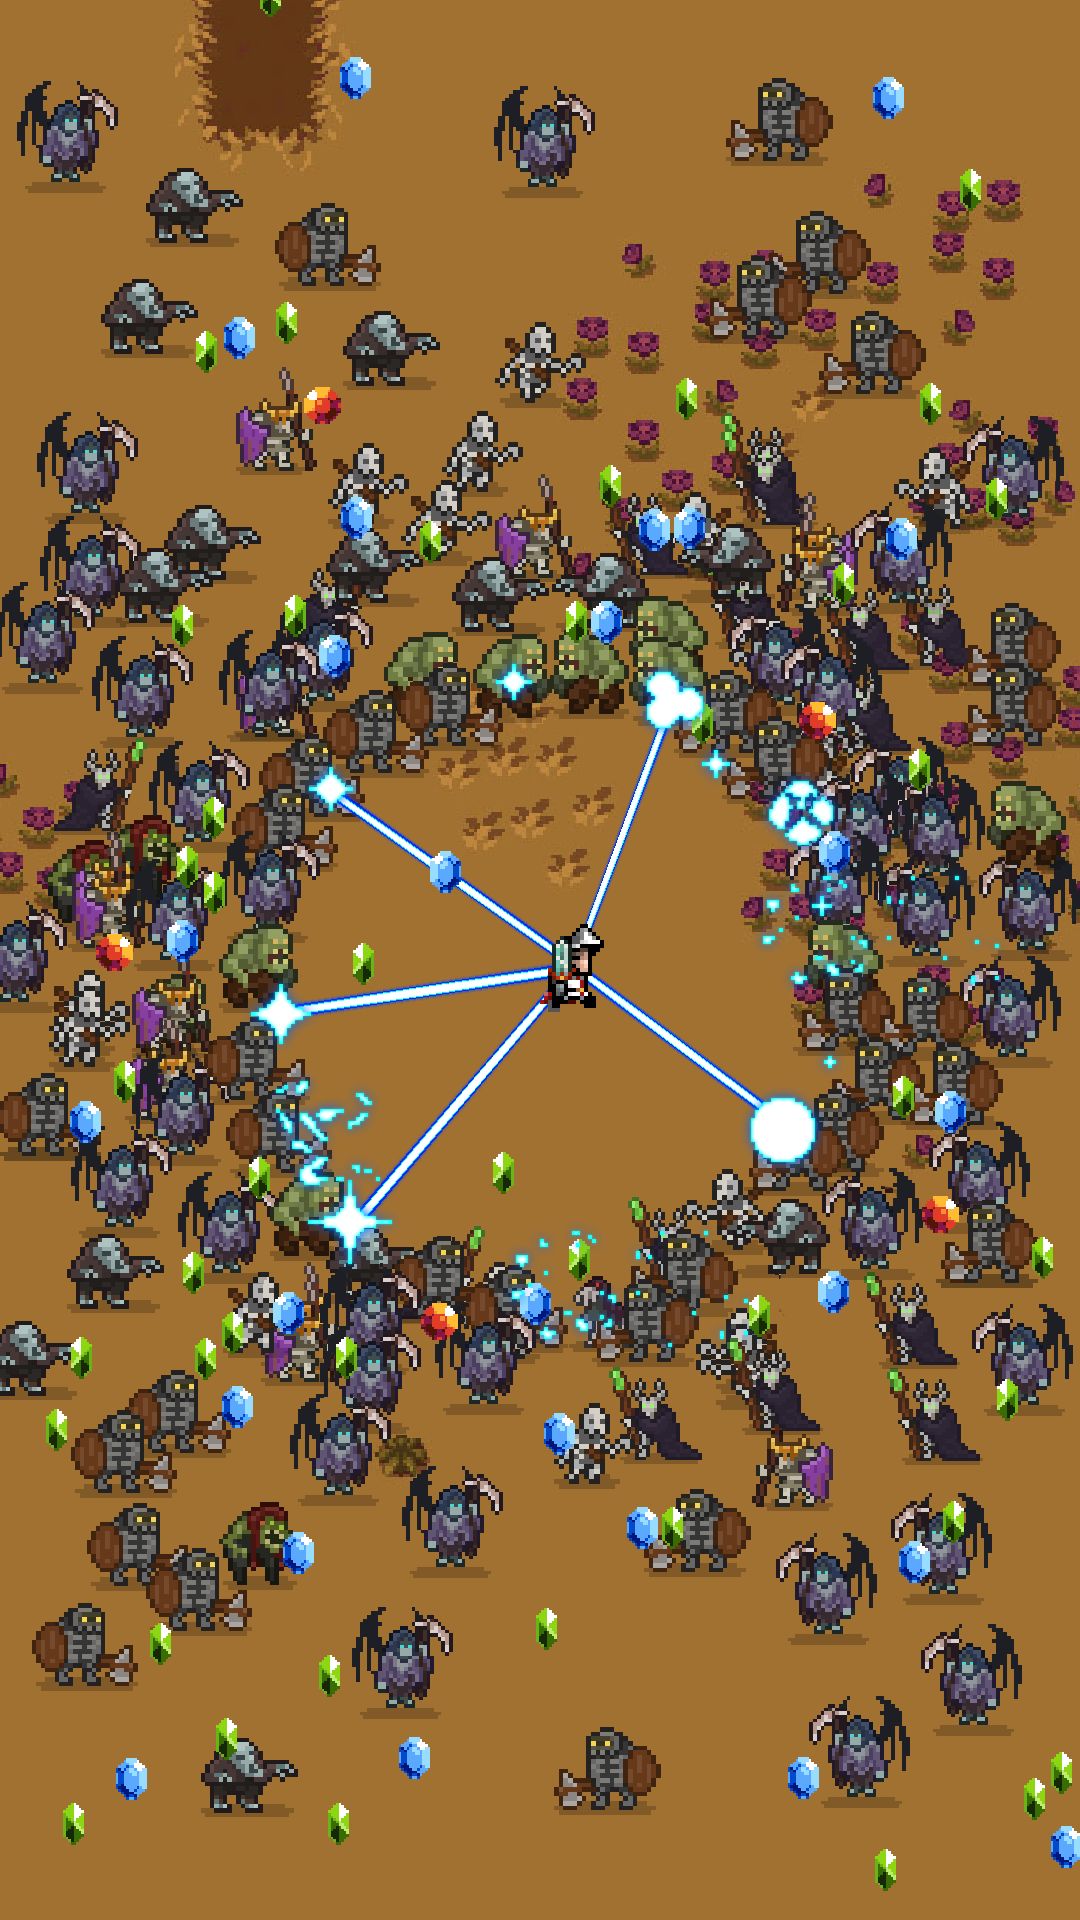 HeroSurvival - Android game screenshots.